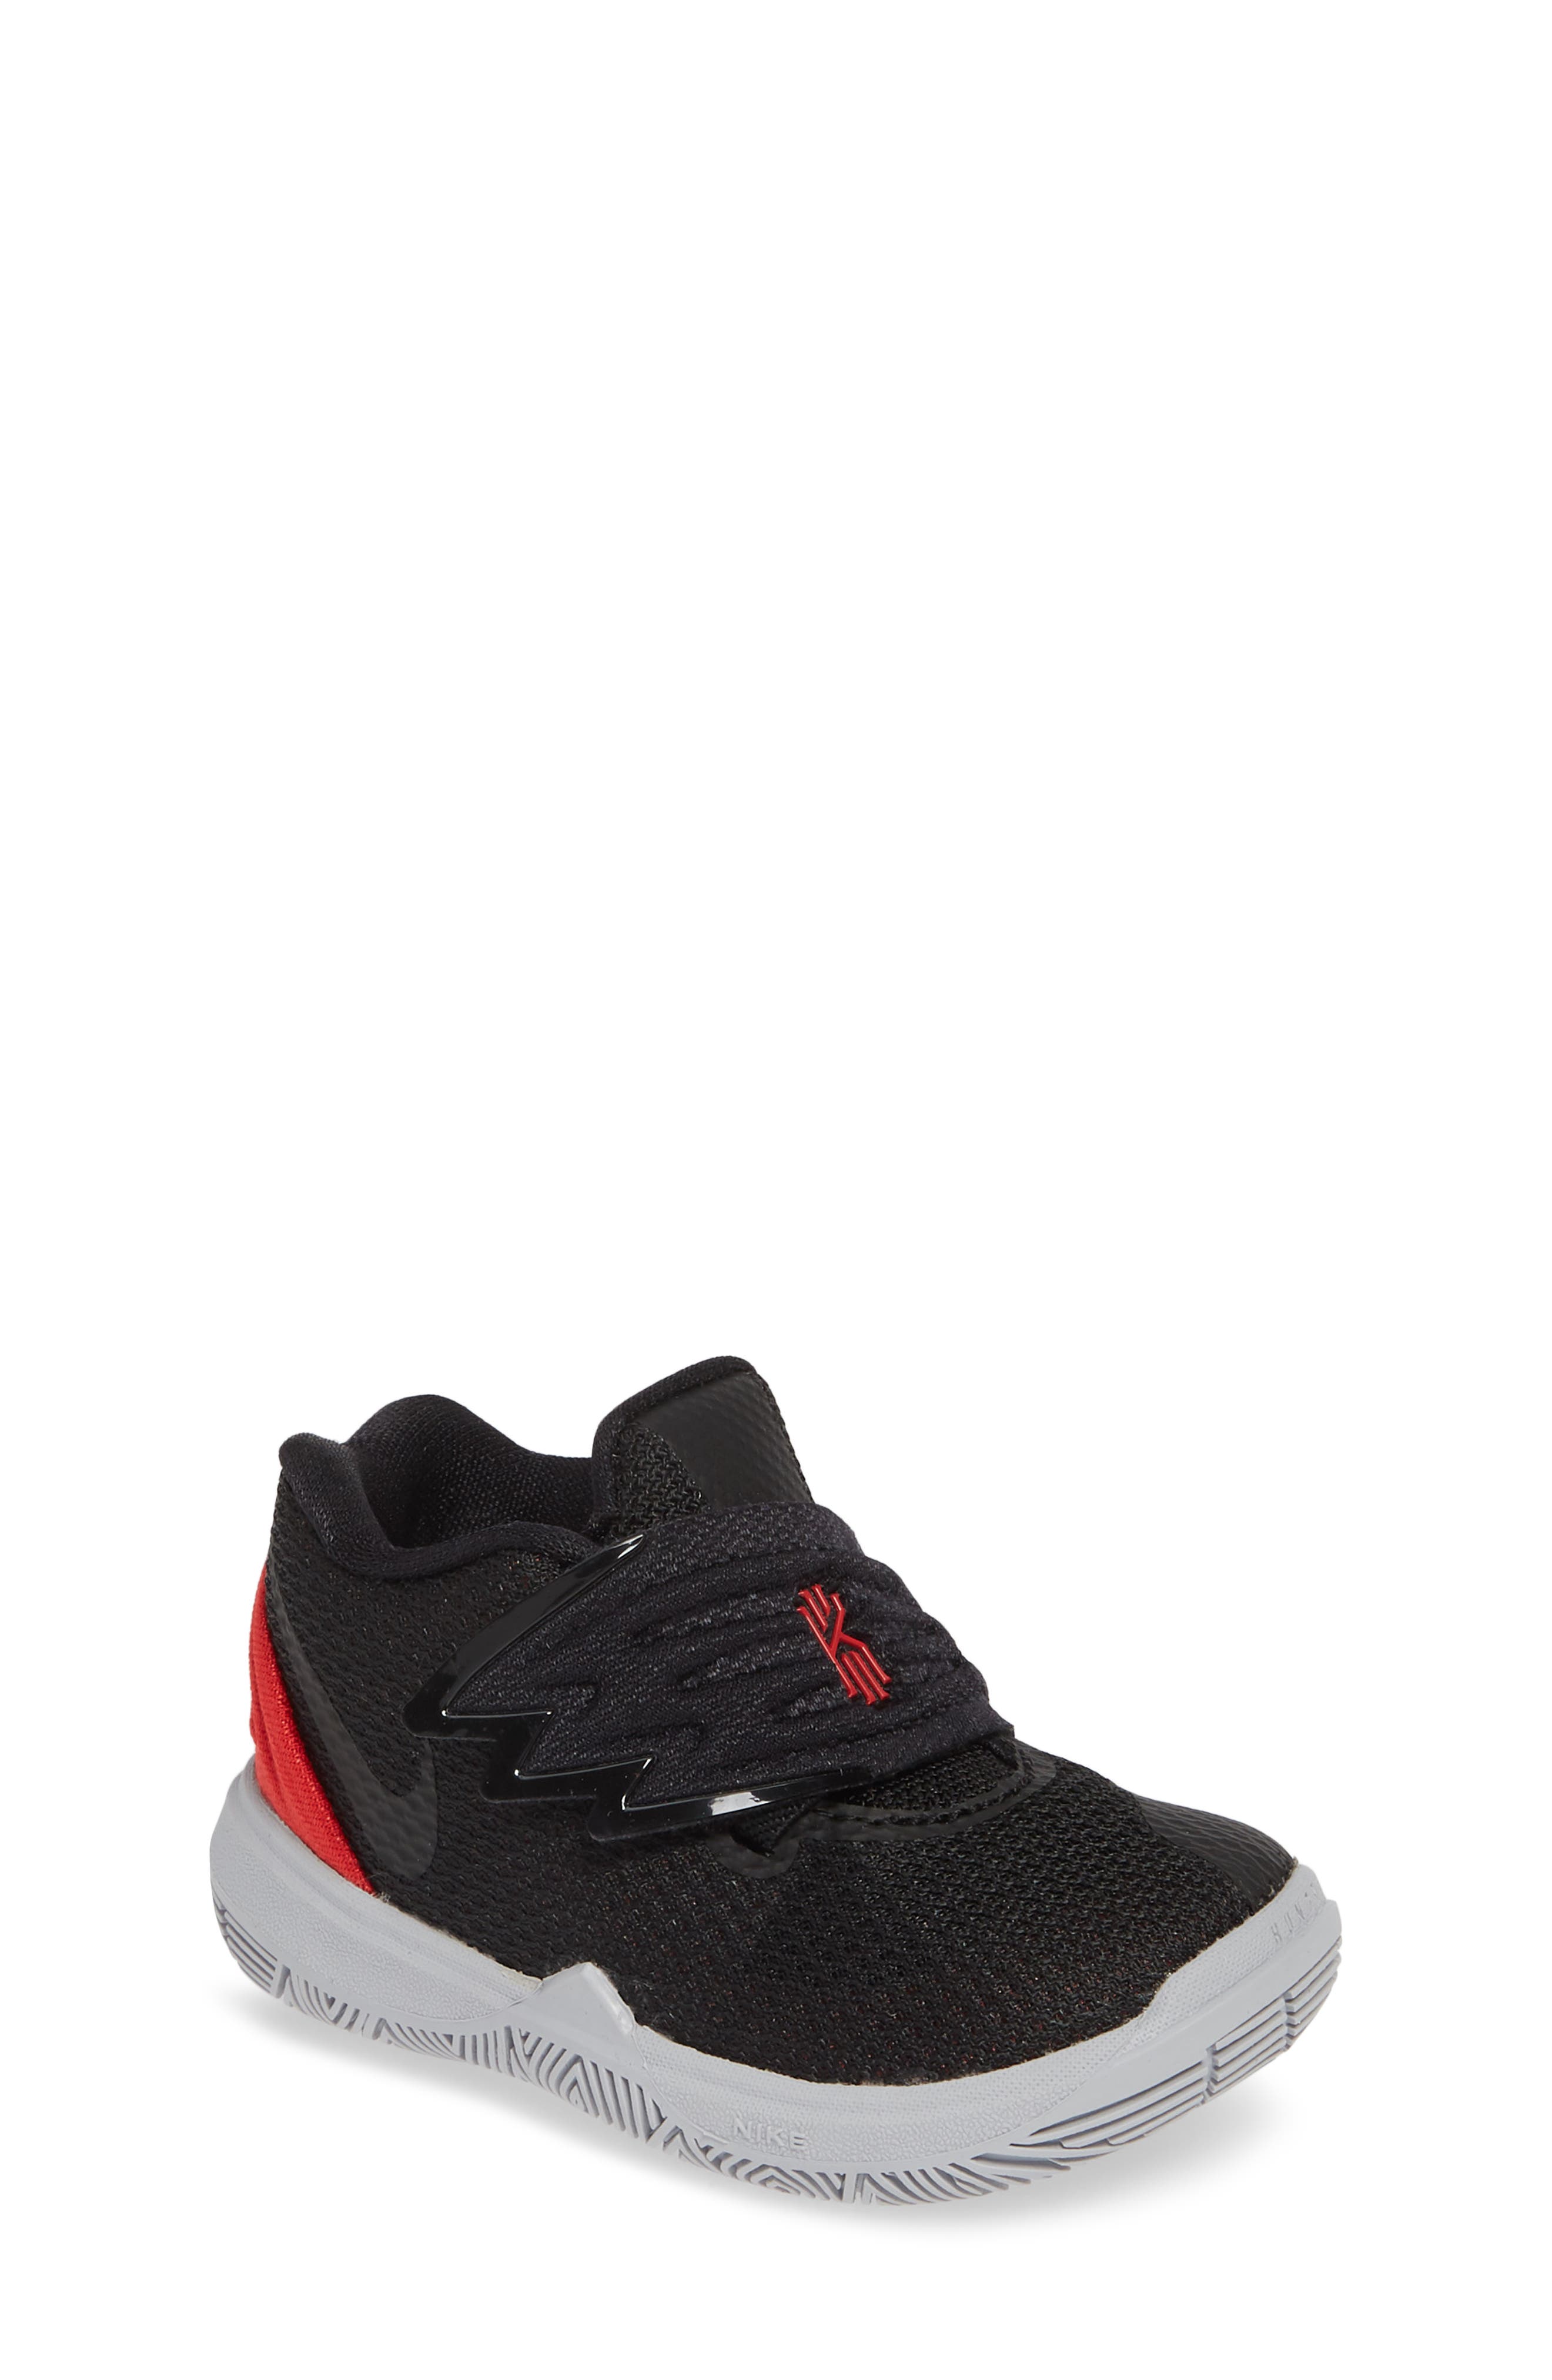 Nike Men 's Kyrie 5 Nylon Basketball Shoes Amazon.com